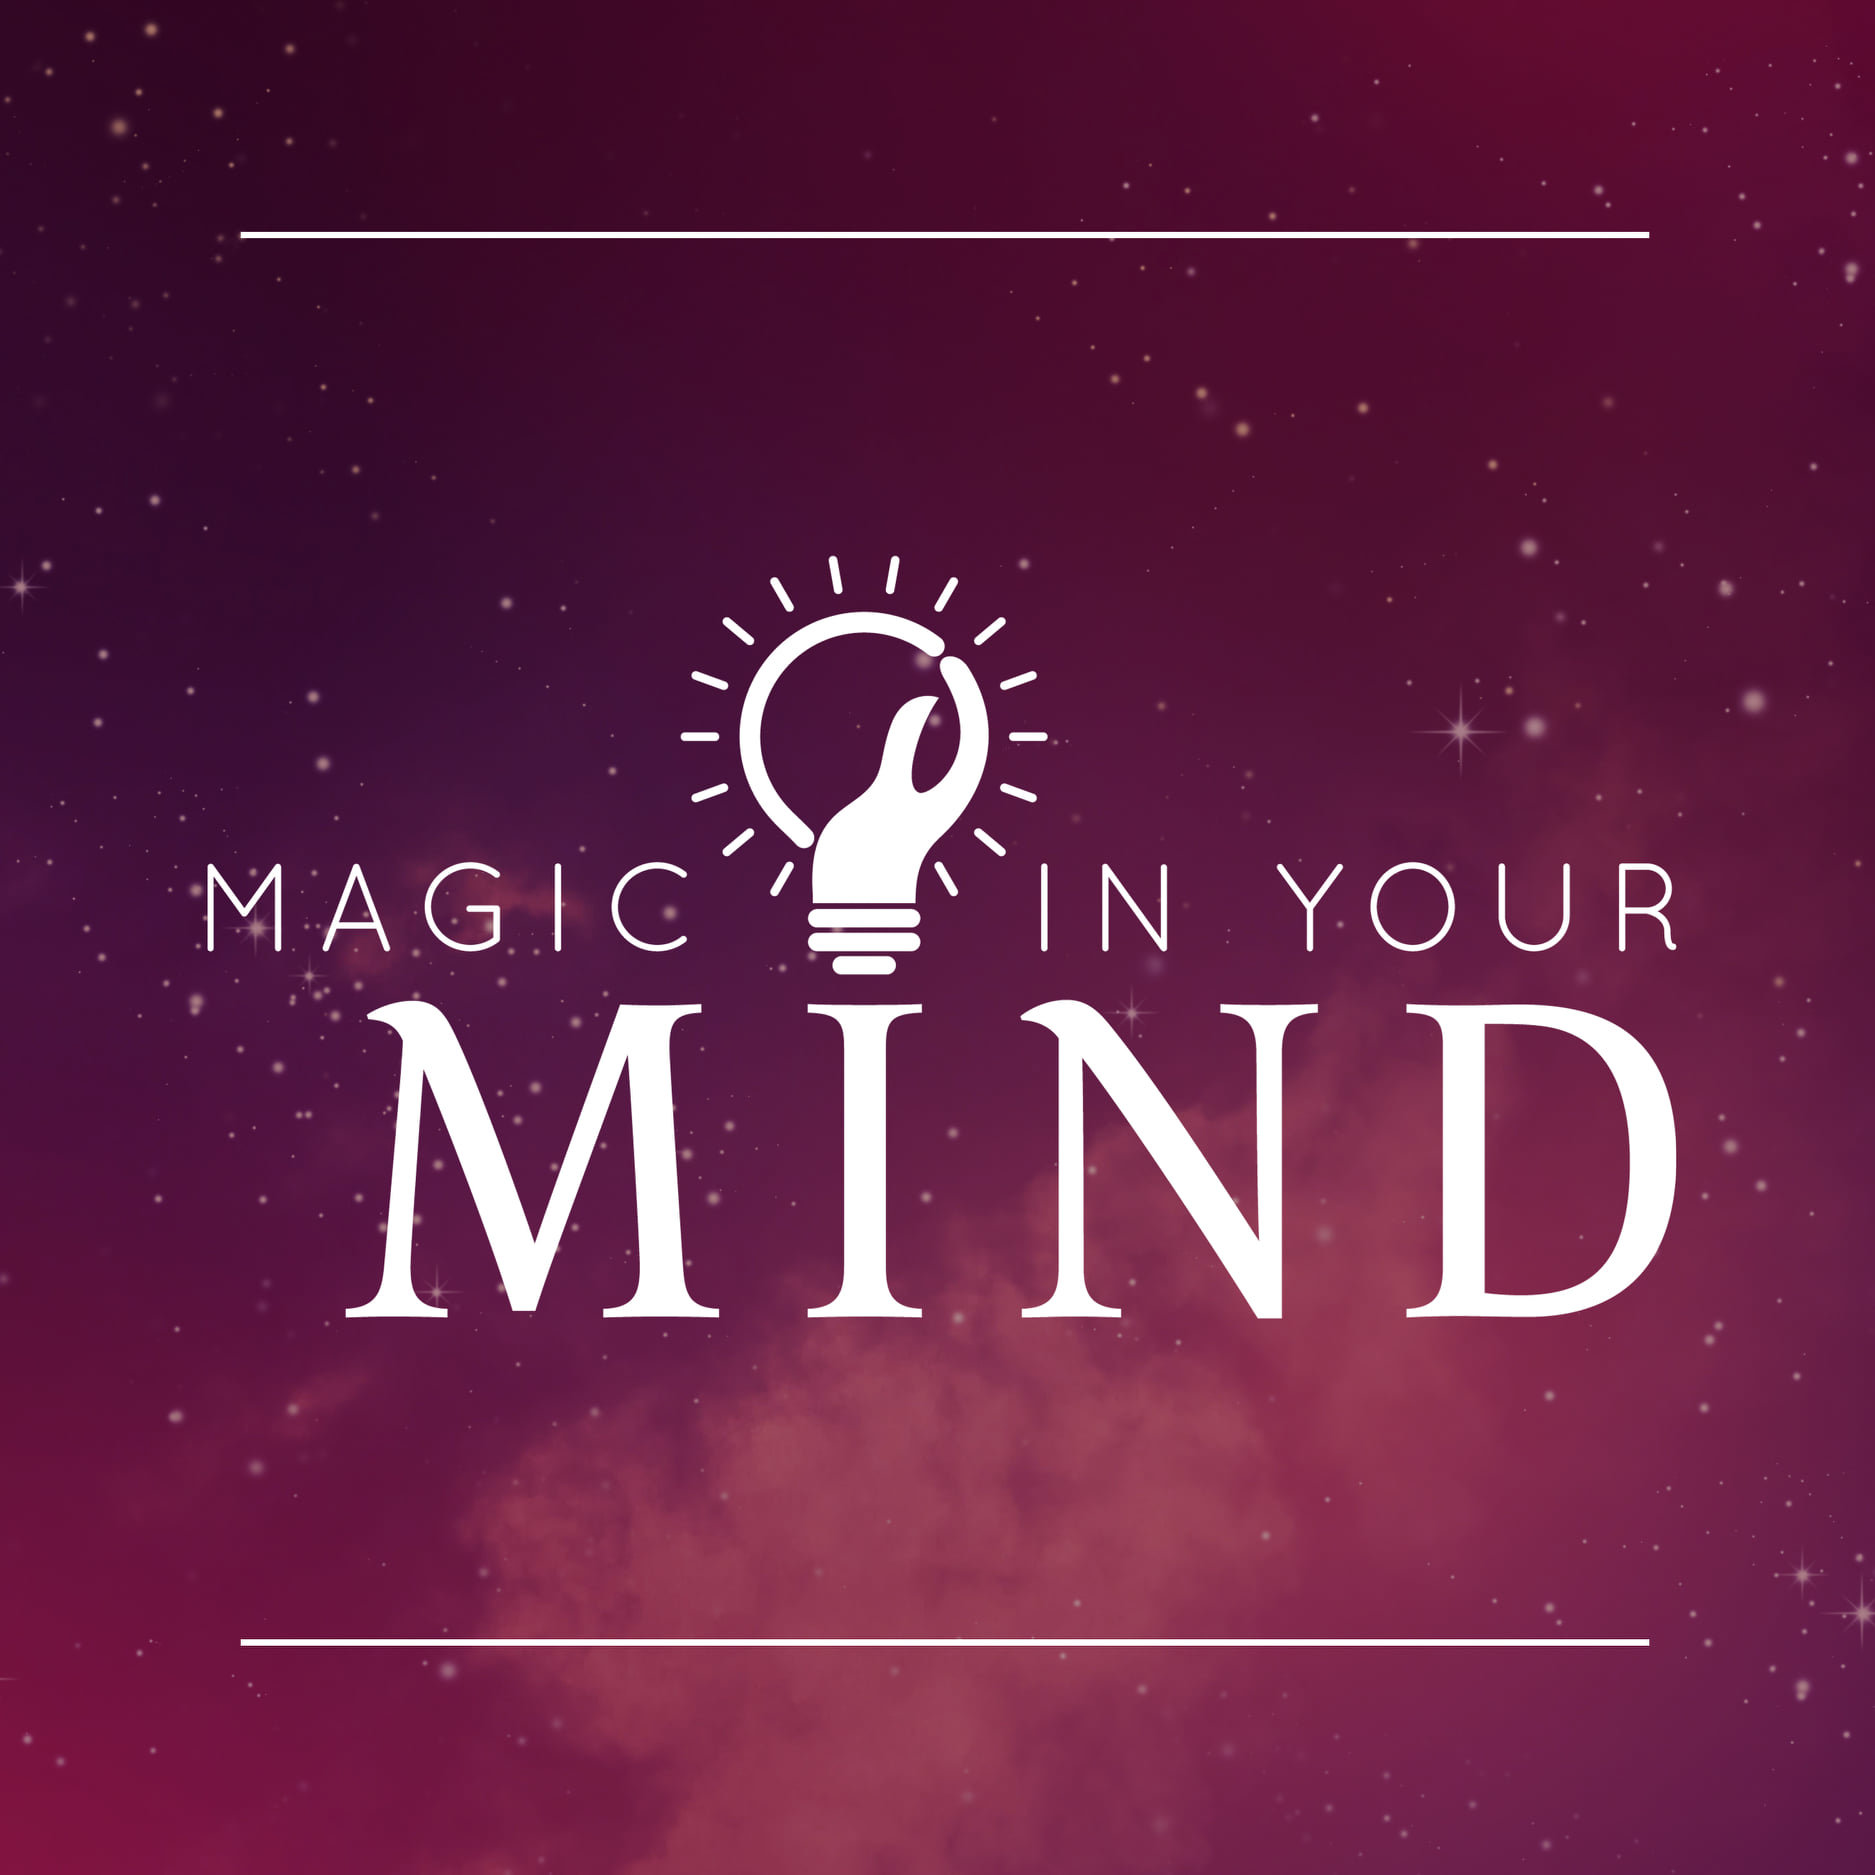 Magic in your mind